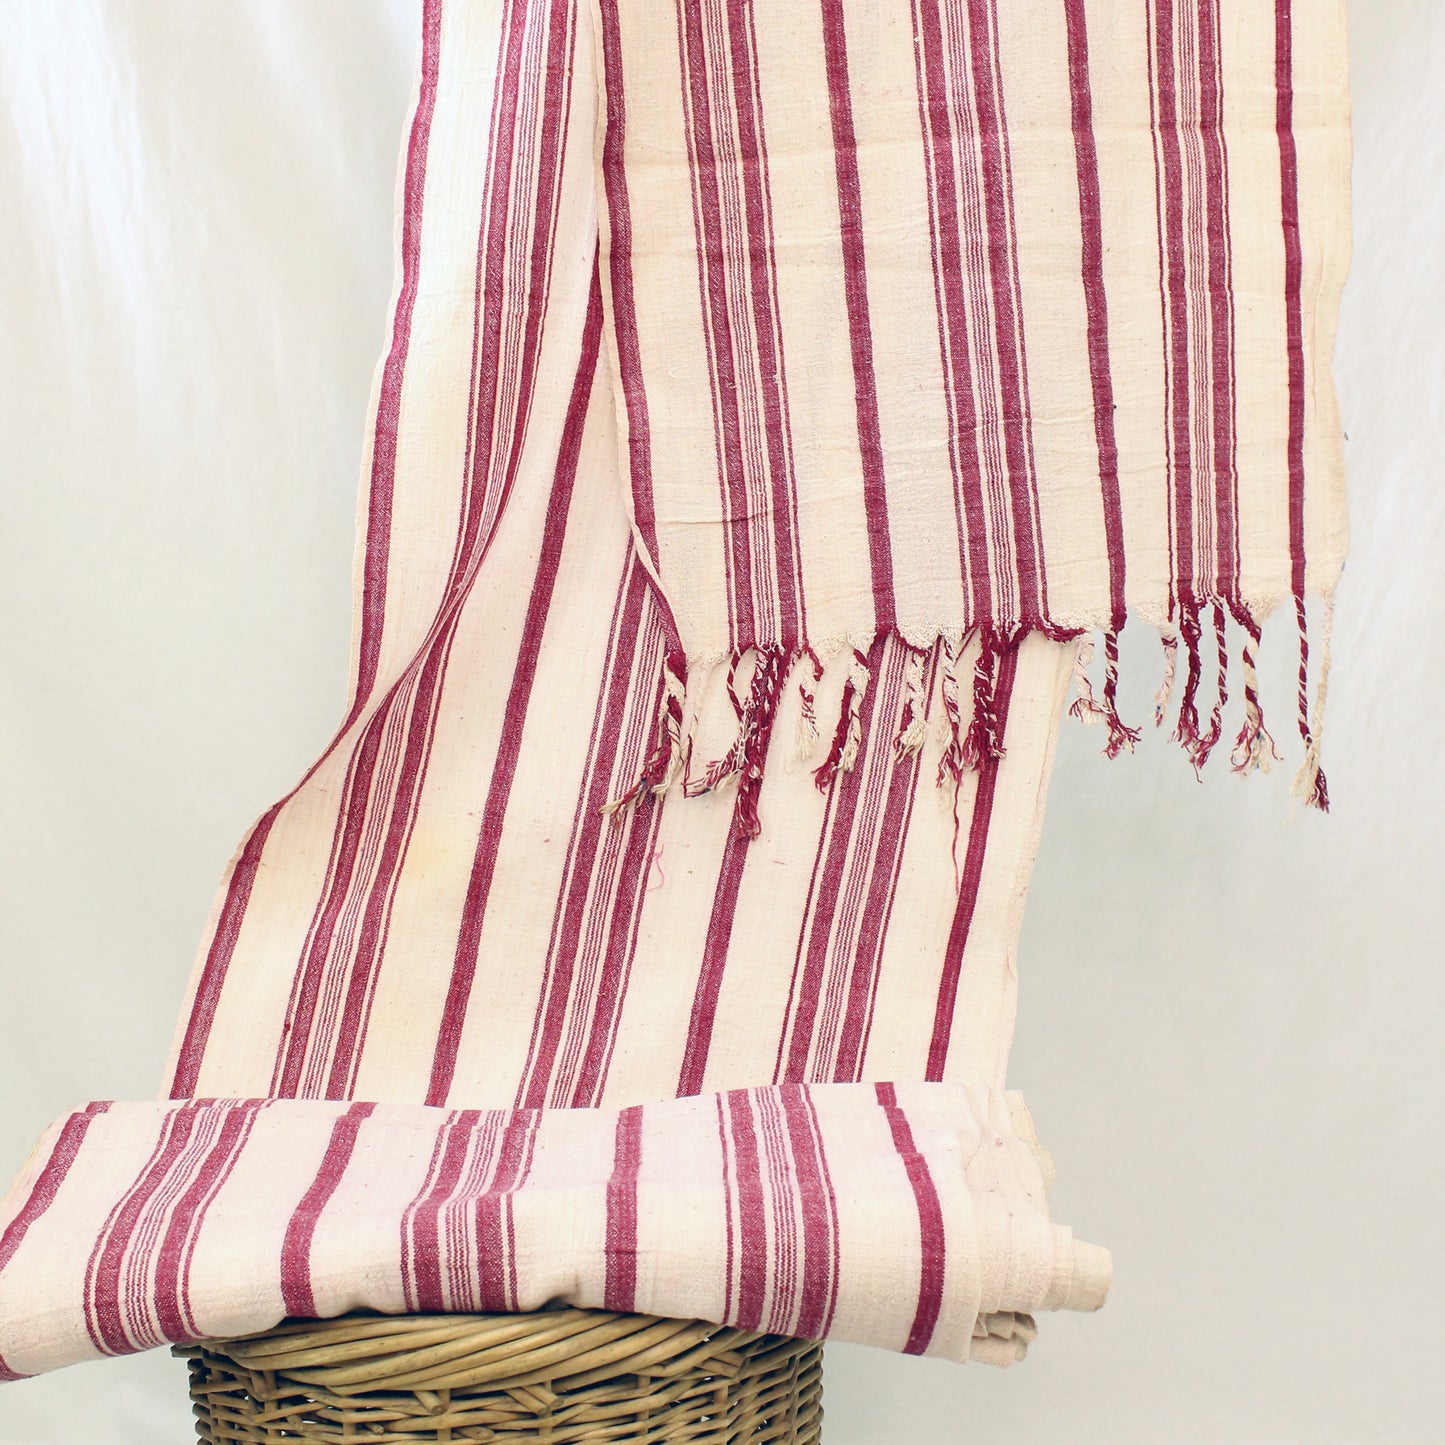 Antique Anatolian Stripe Fabric